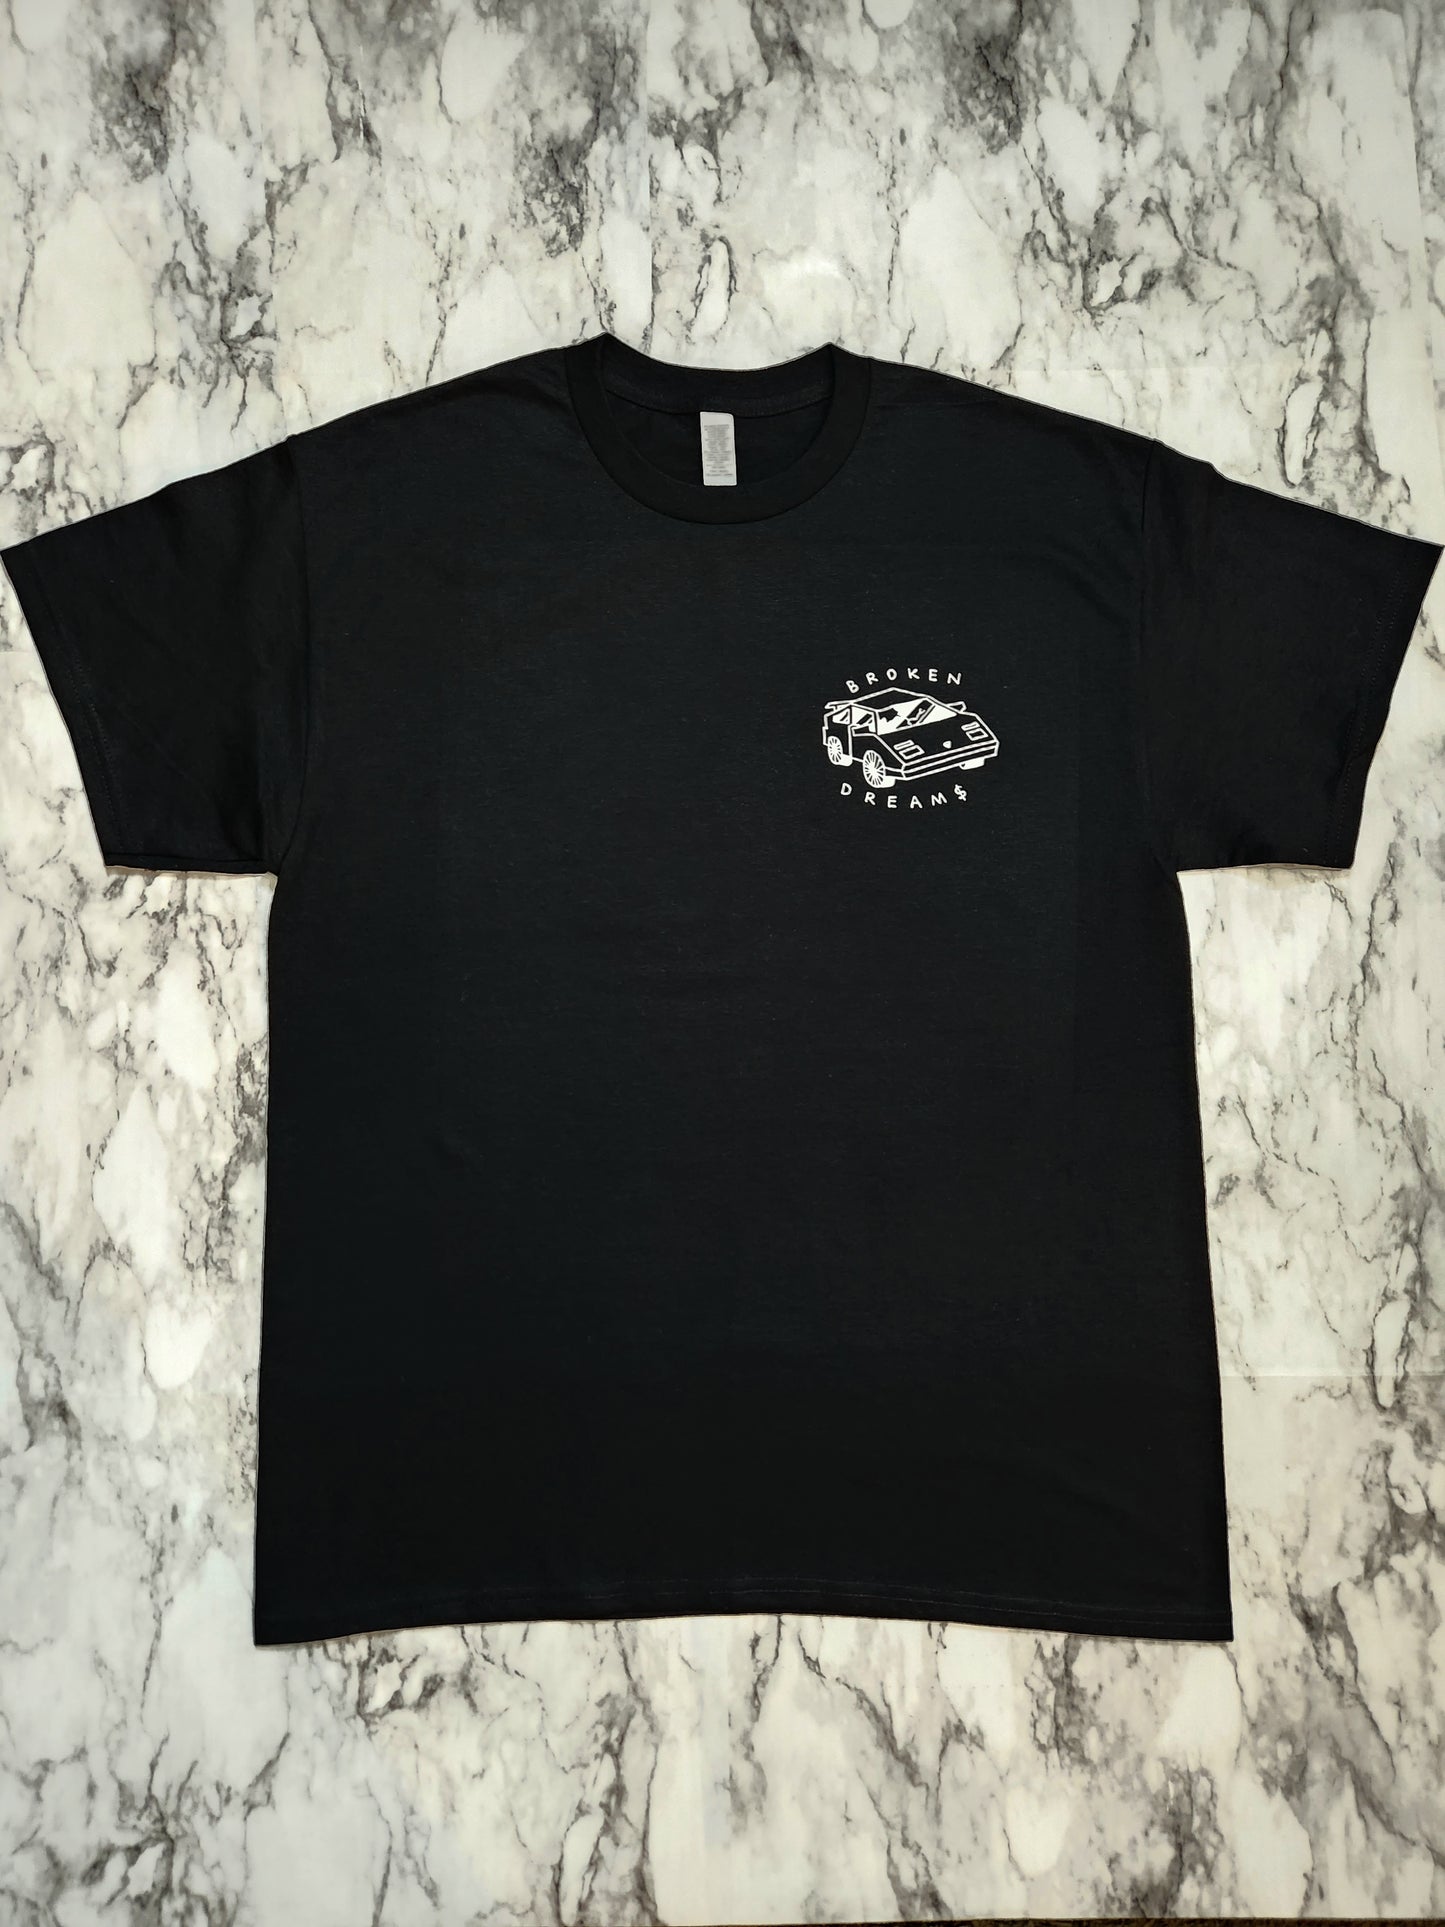 Broken Dreams T-Shirt (Black)